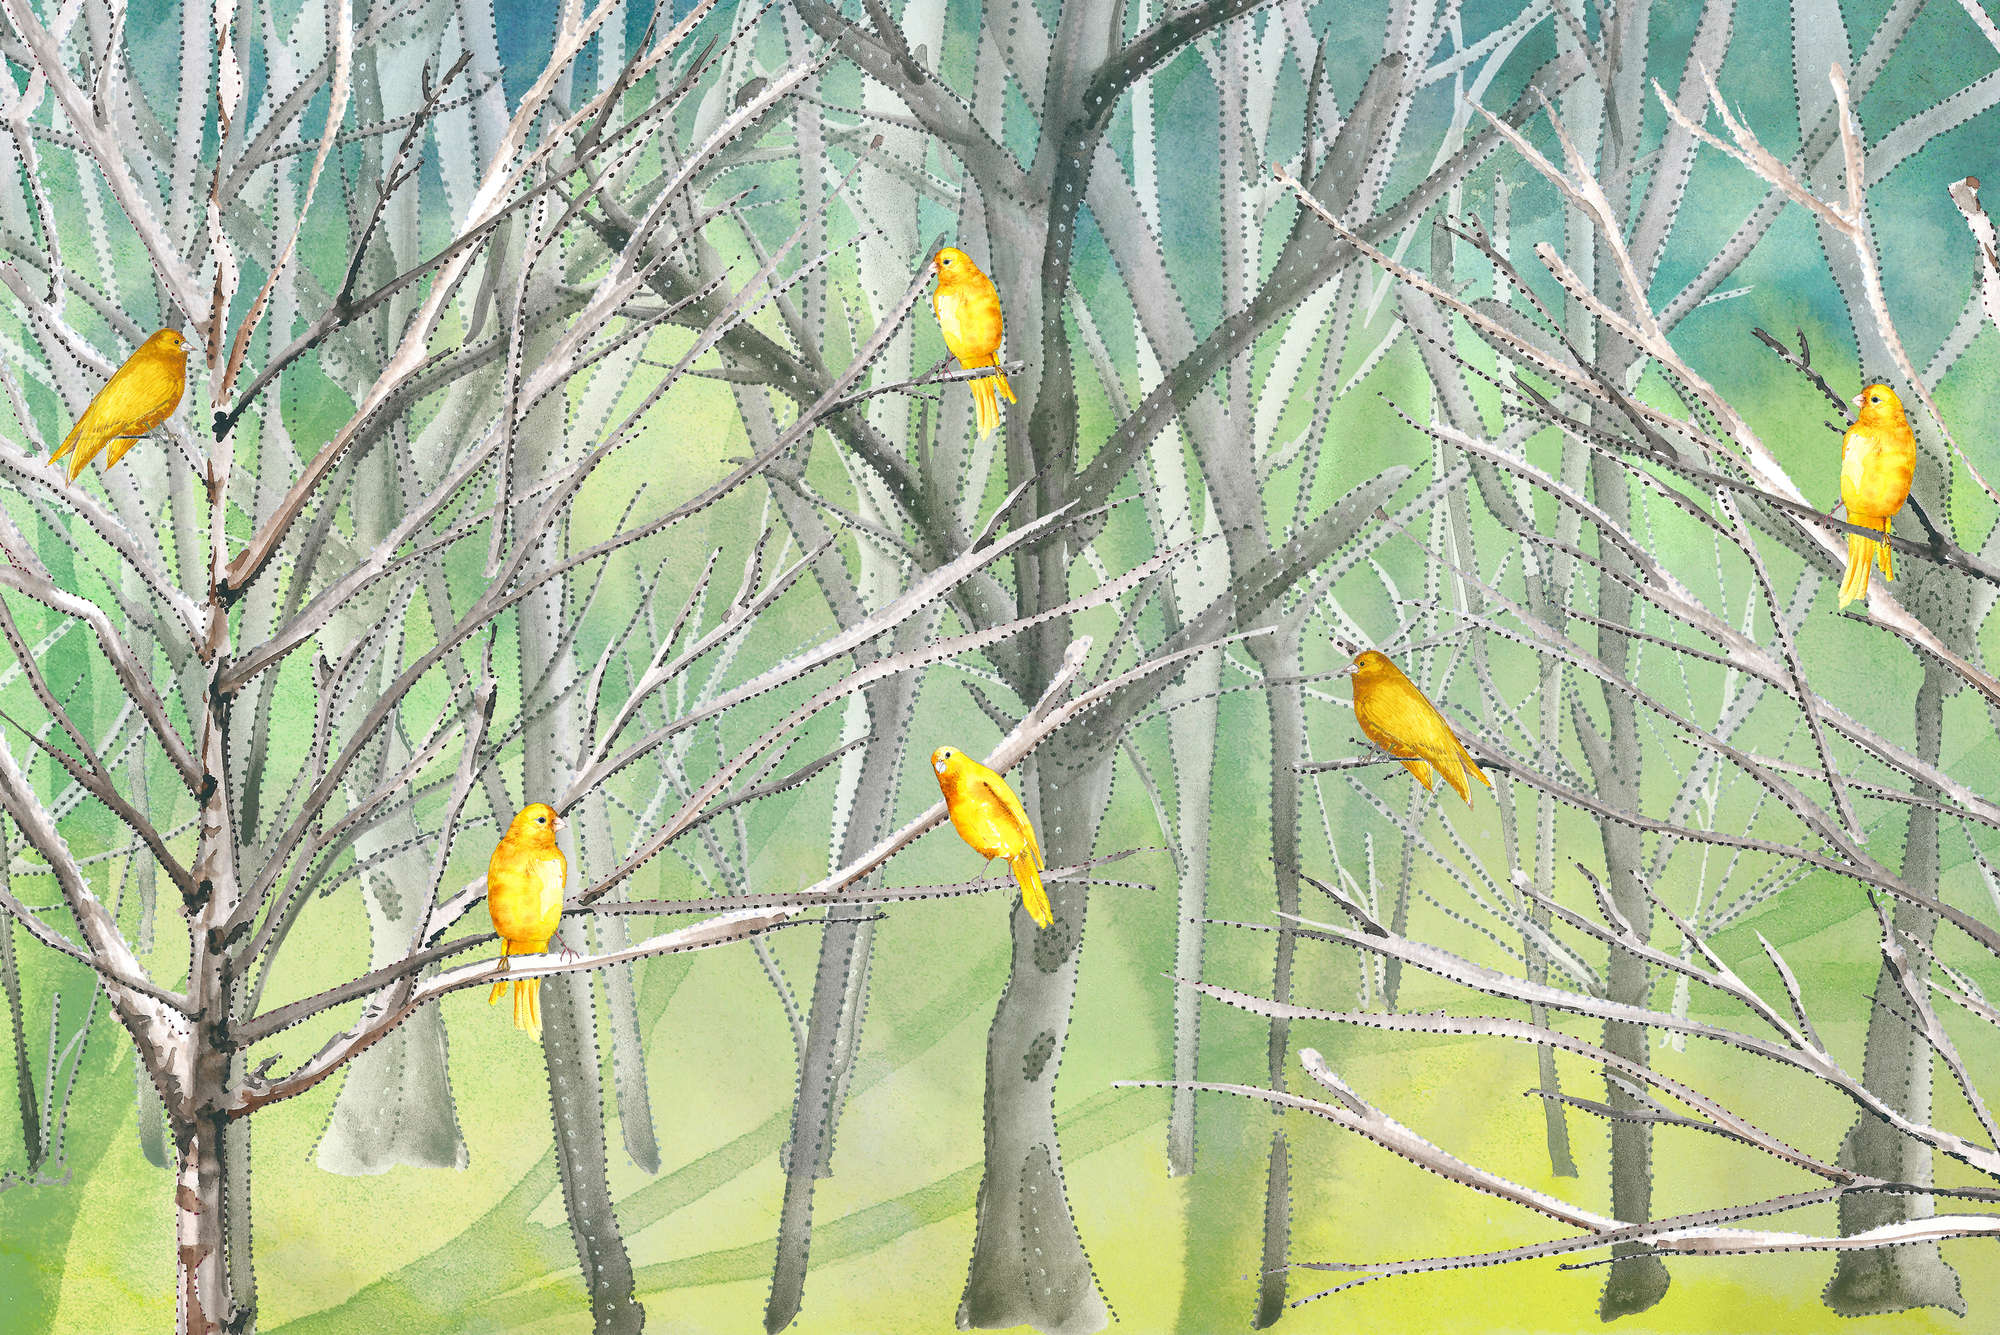             Carta da parati forestale con uccelli blu e gialli su tessuto di pile
        